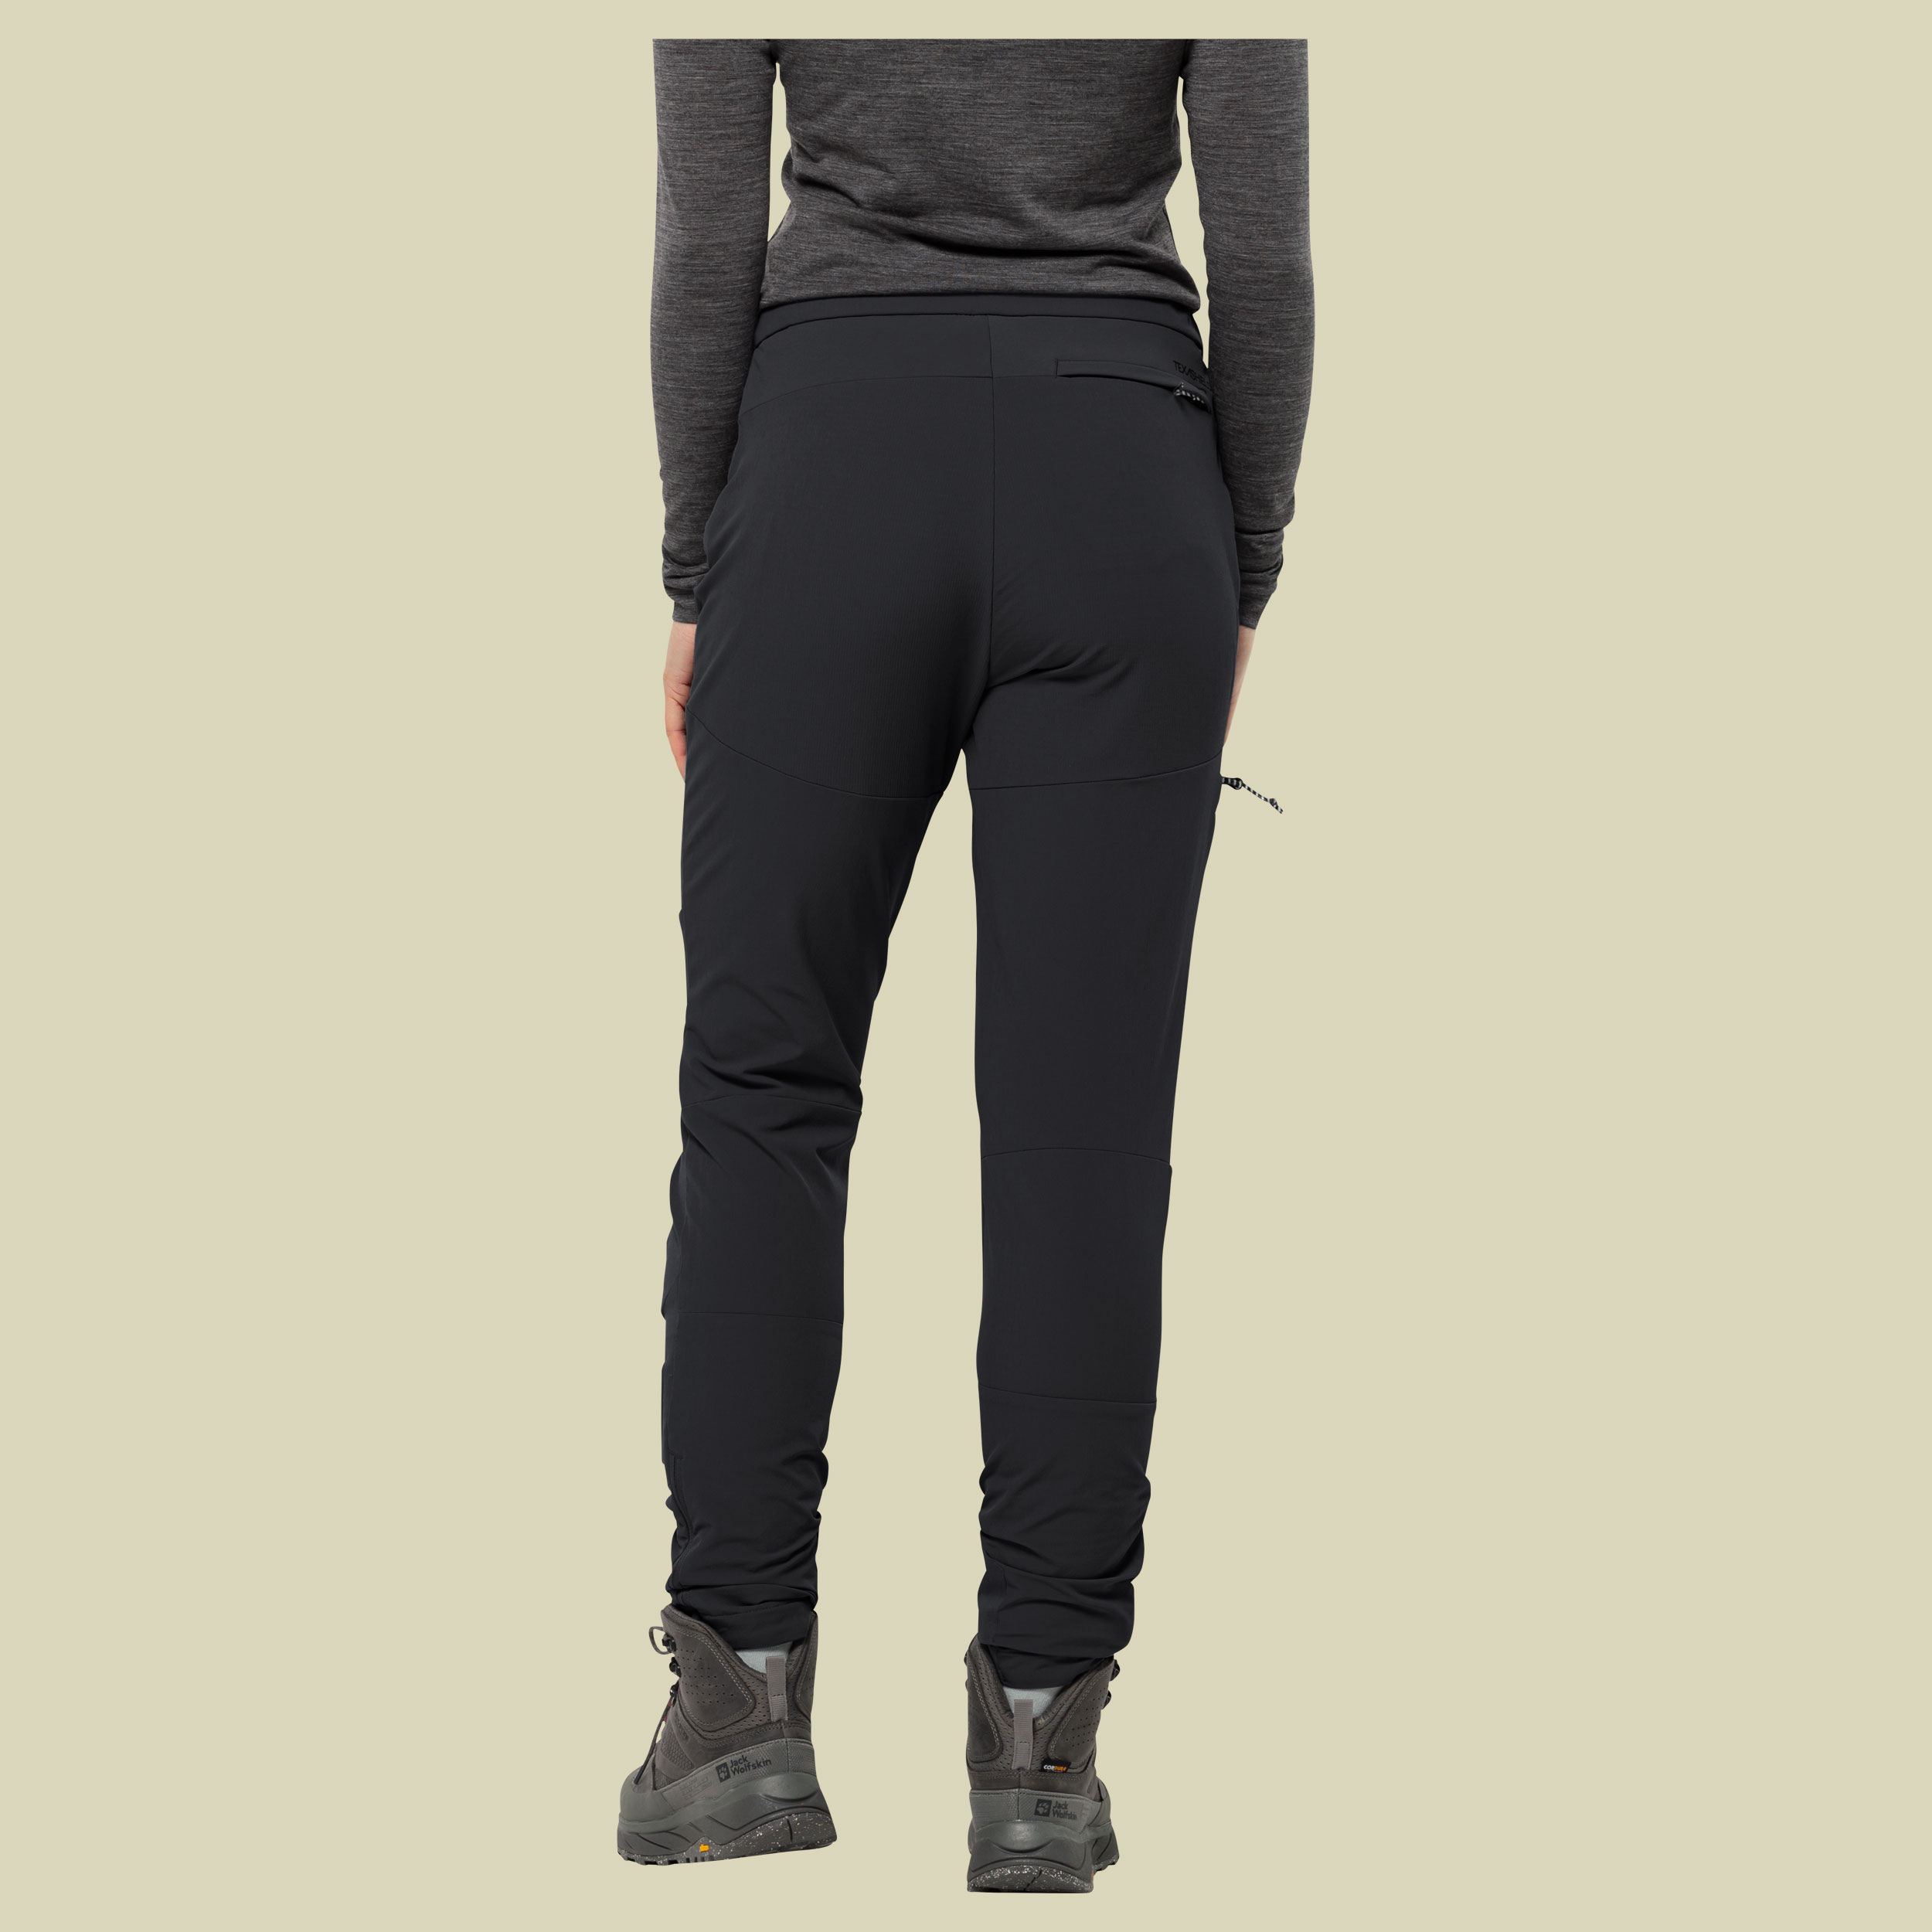 Salmaser Pants Women Größe 36 Farbe black